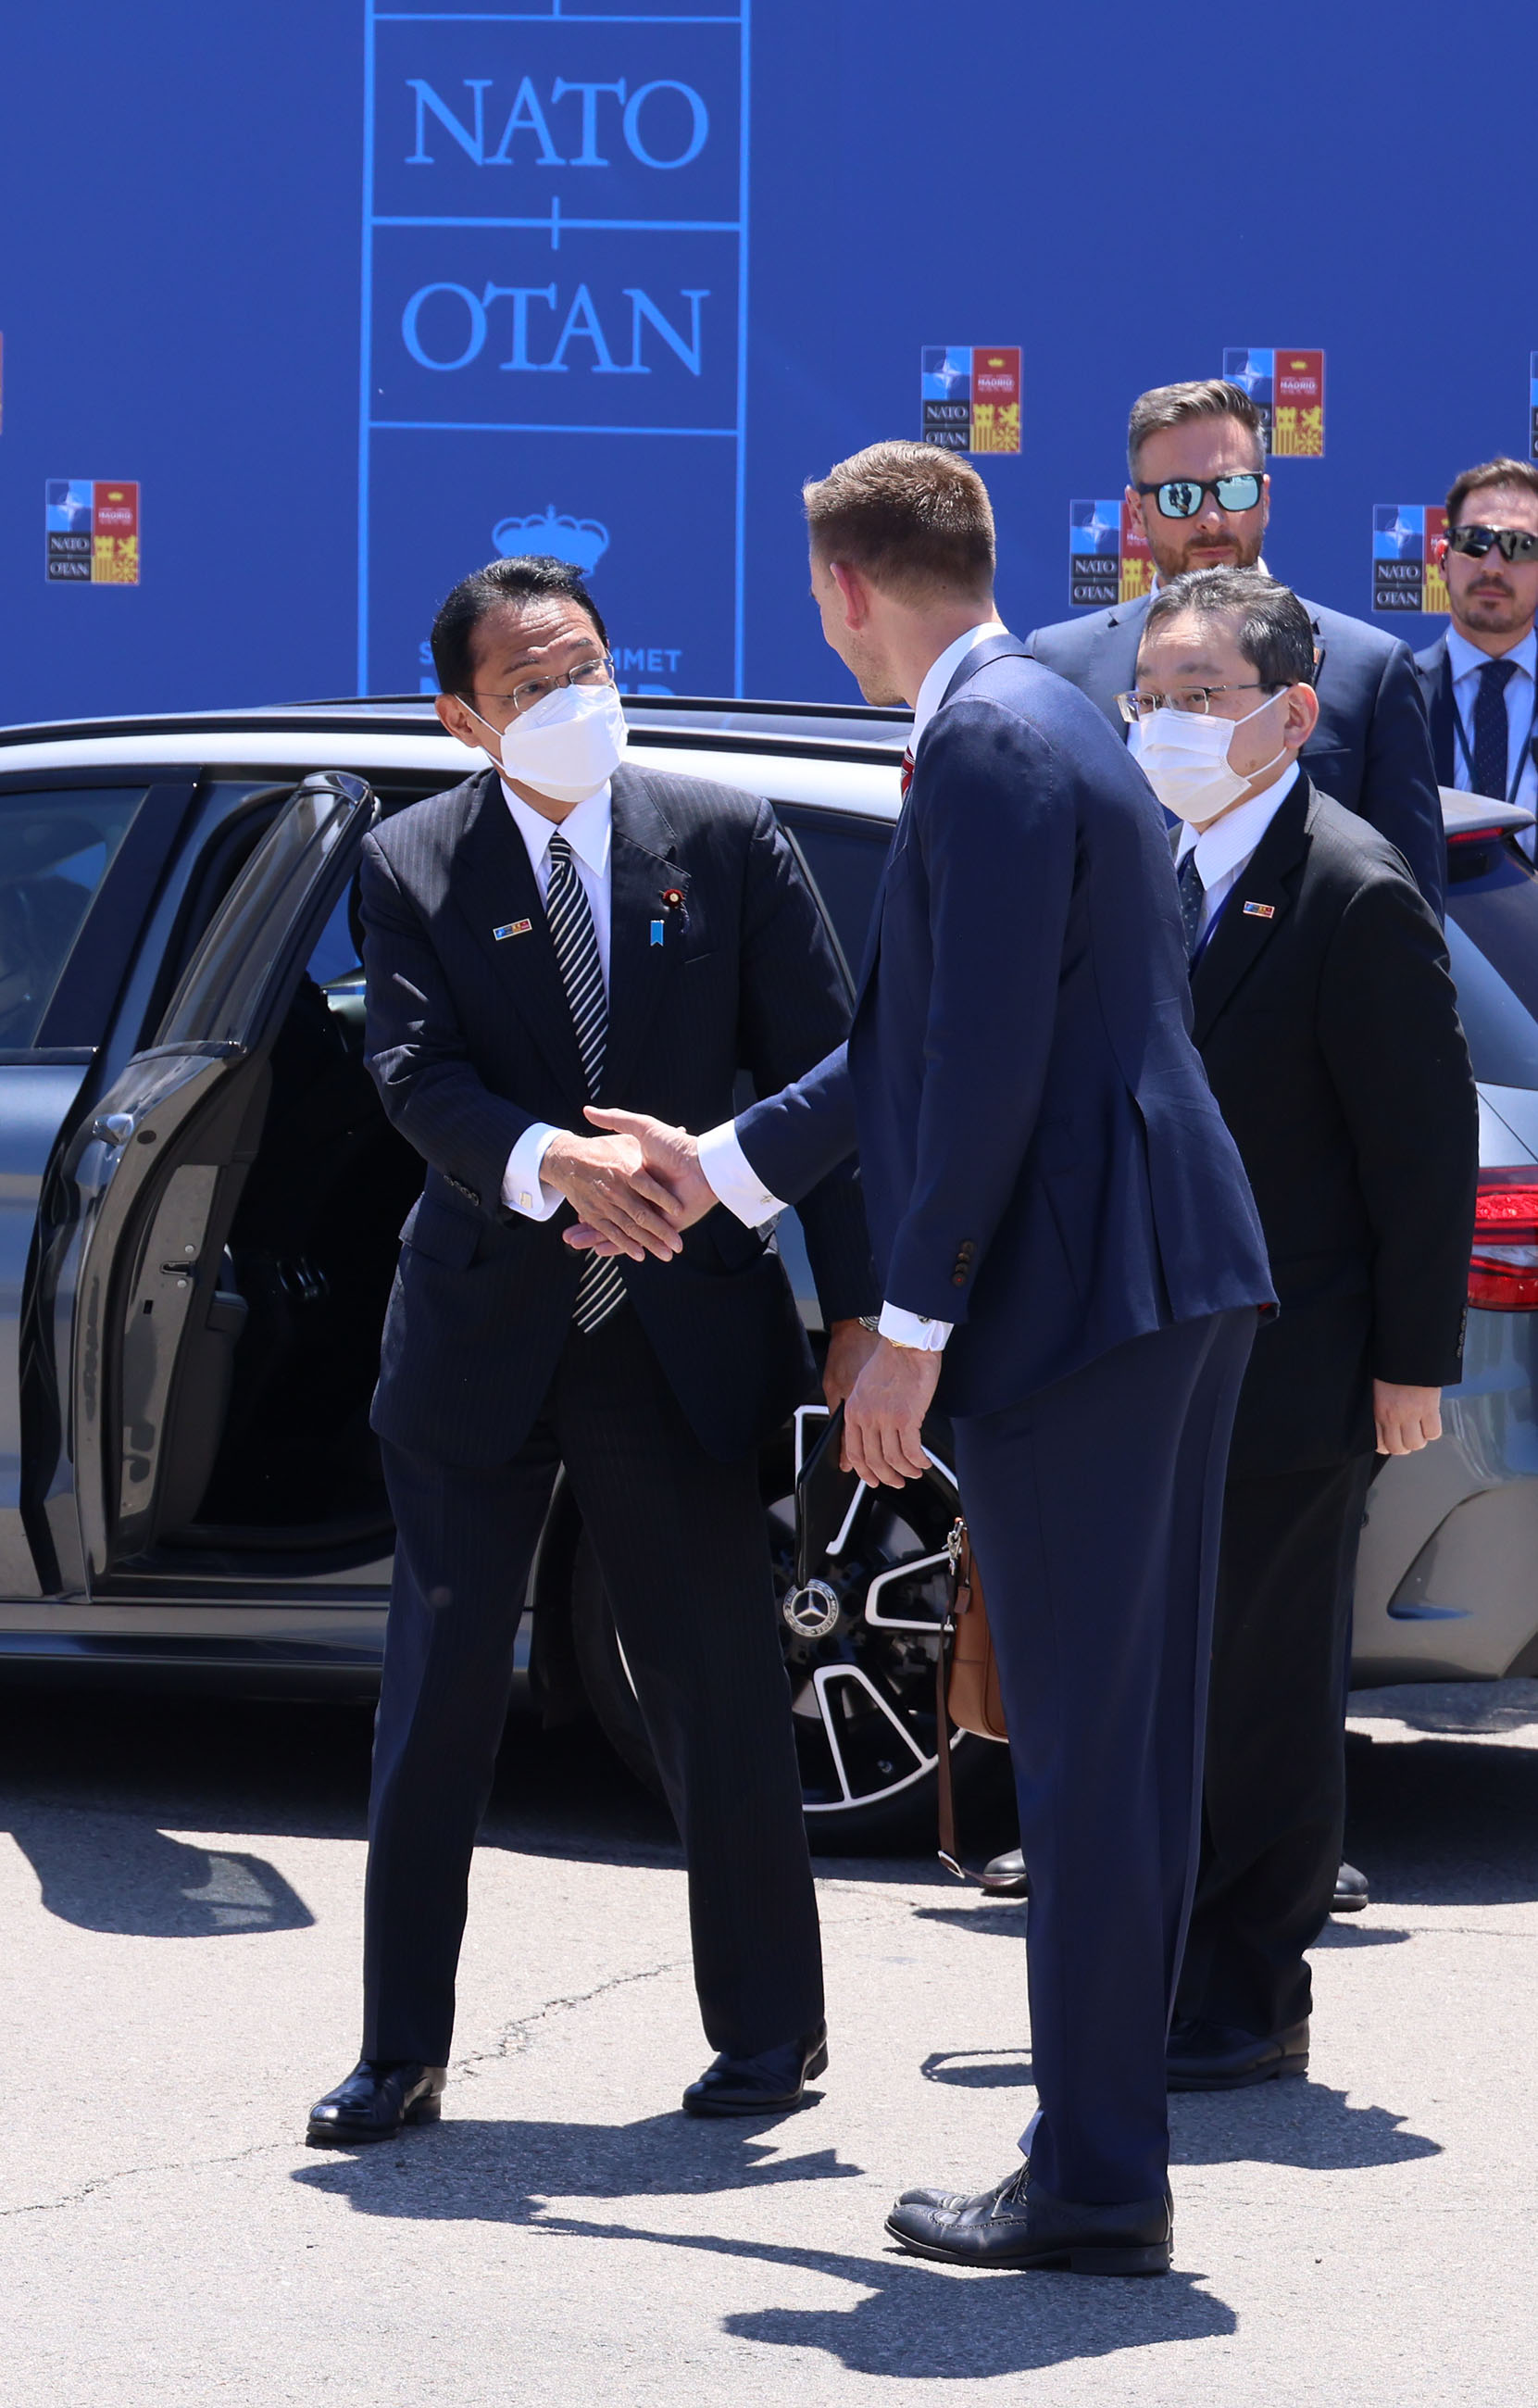 Prime Minister Kishida arriving at the venue of the NATO Summit (1)